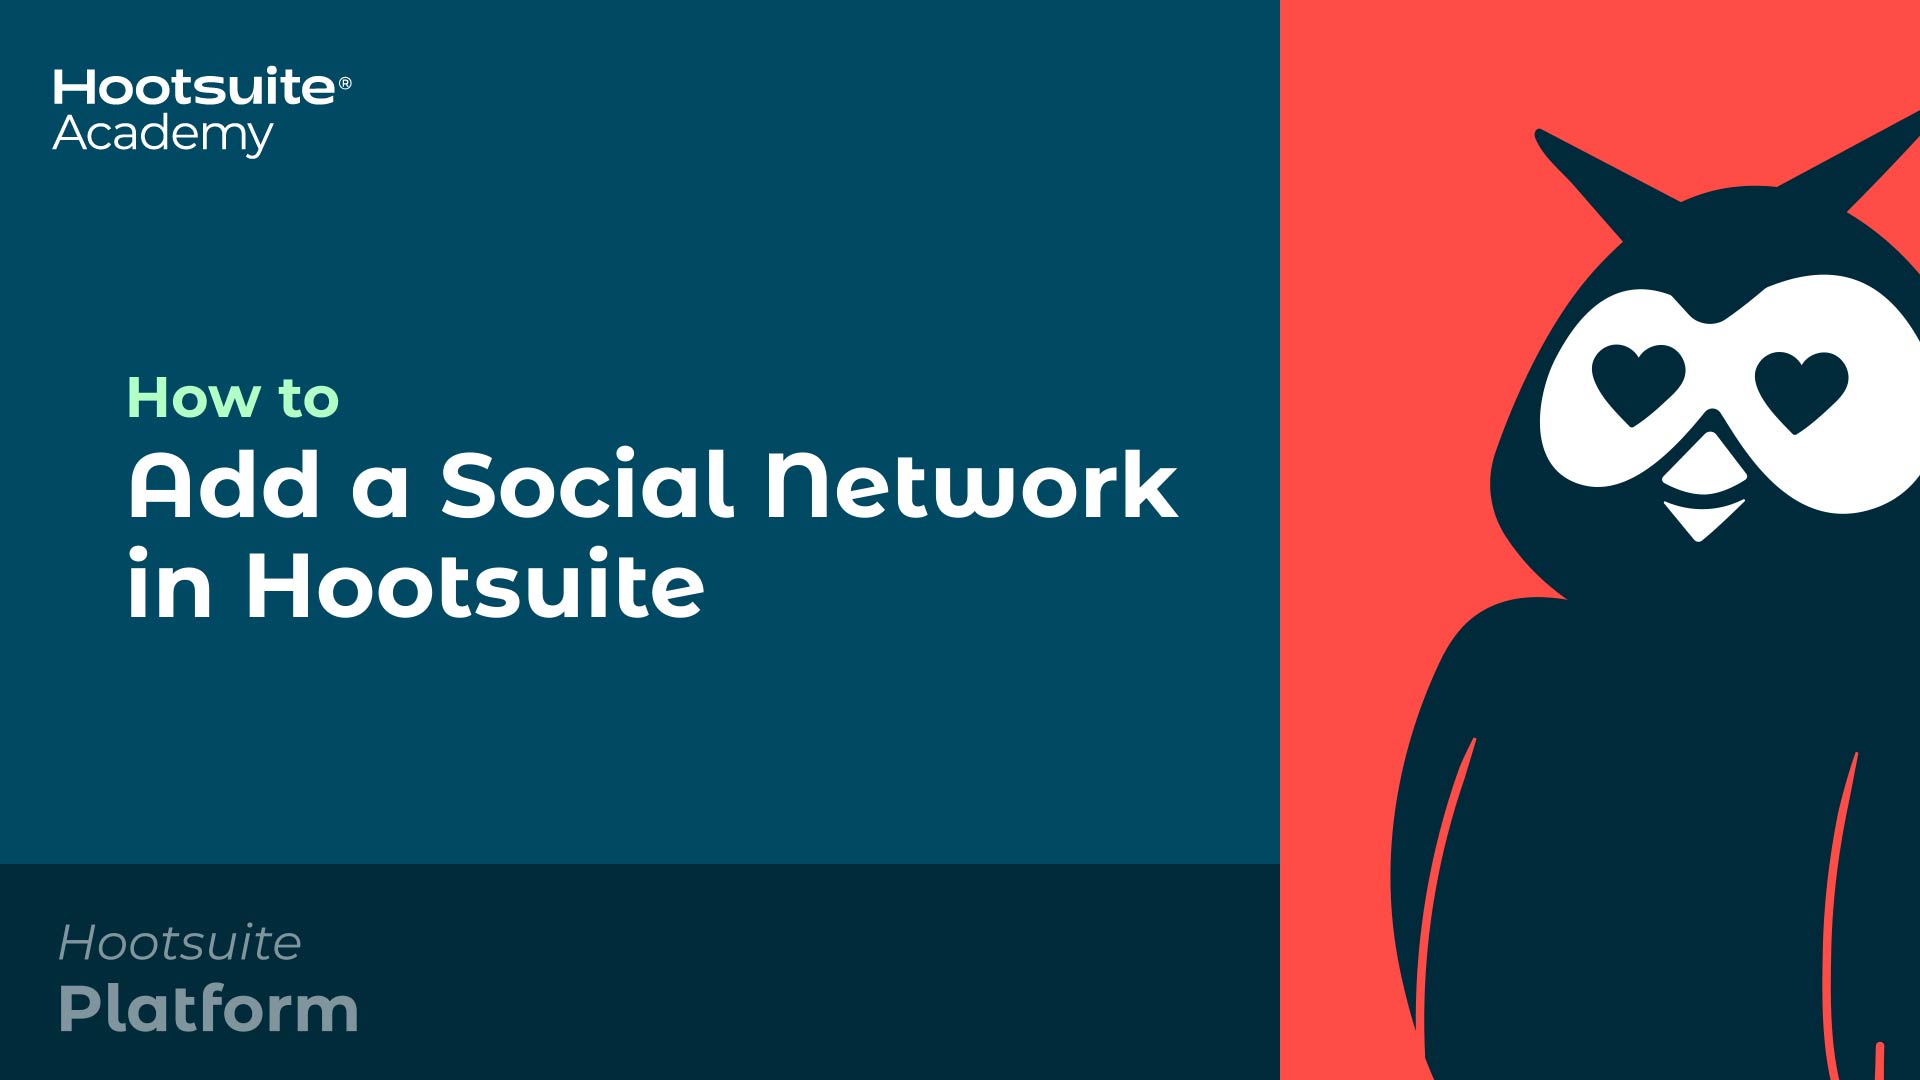 Video: come aggiungere un social network in Hootsuite.